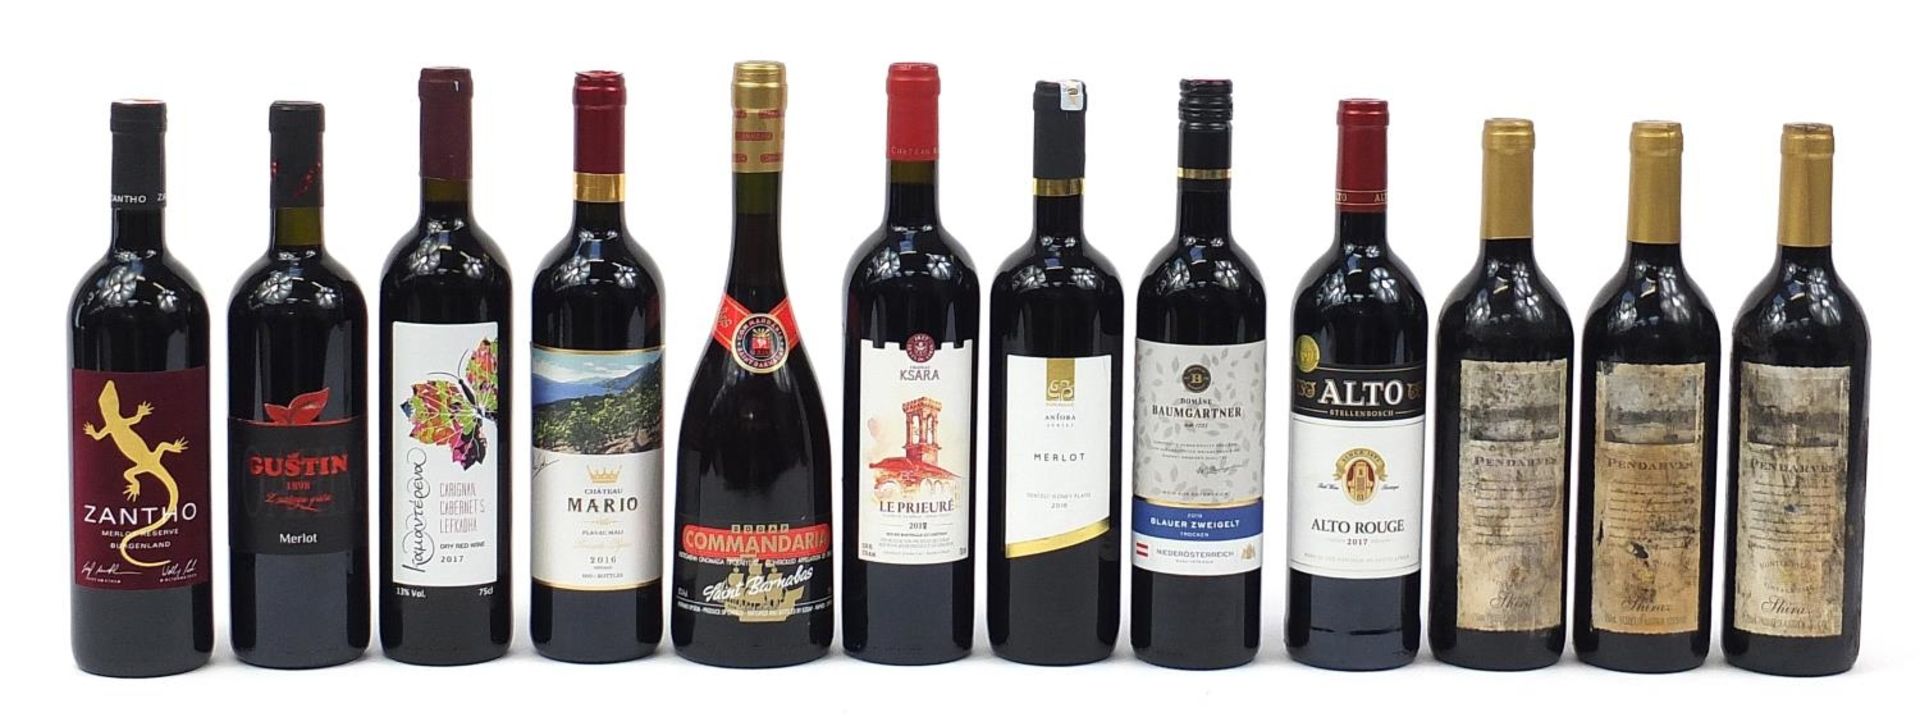 Twelve bottles of red wine including Chateau Ksara Dendarves, Shiraz and Zantho Merlot